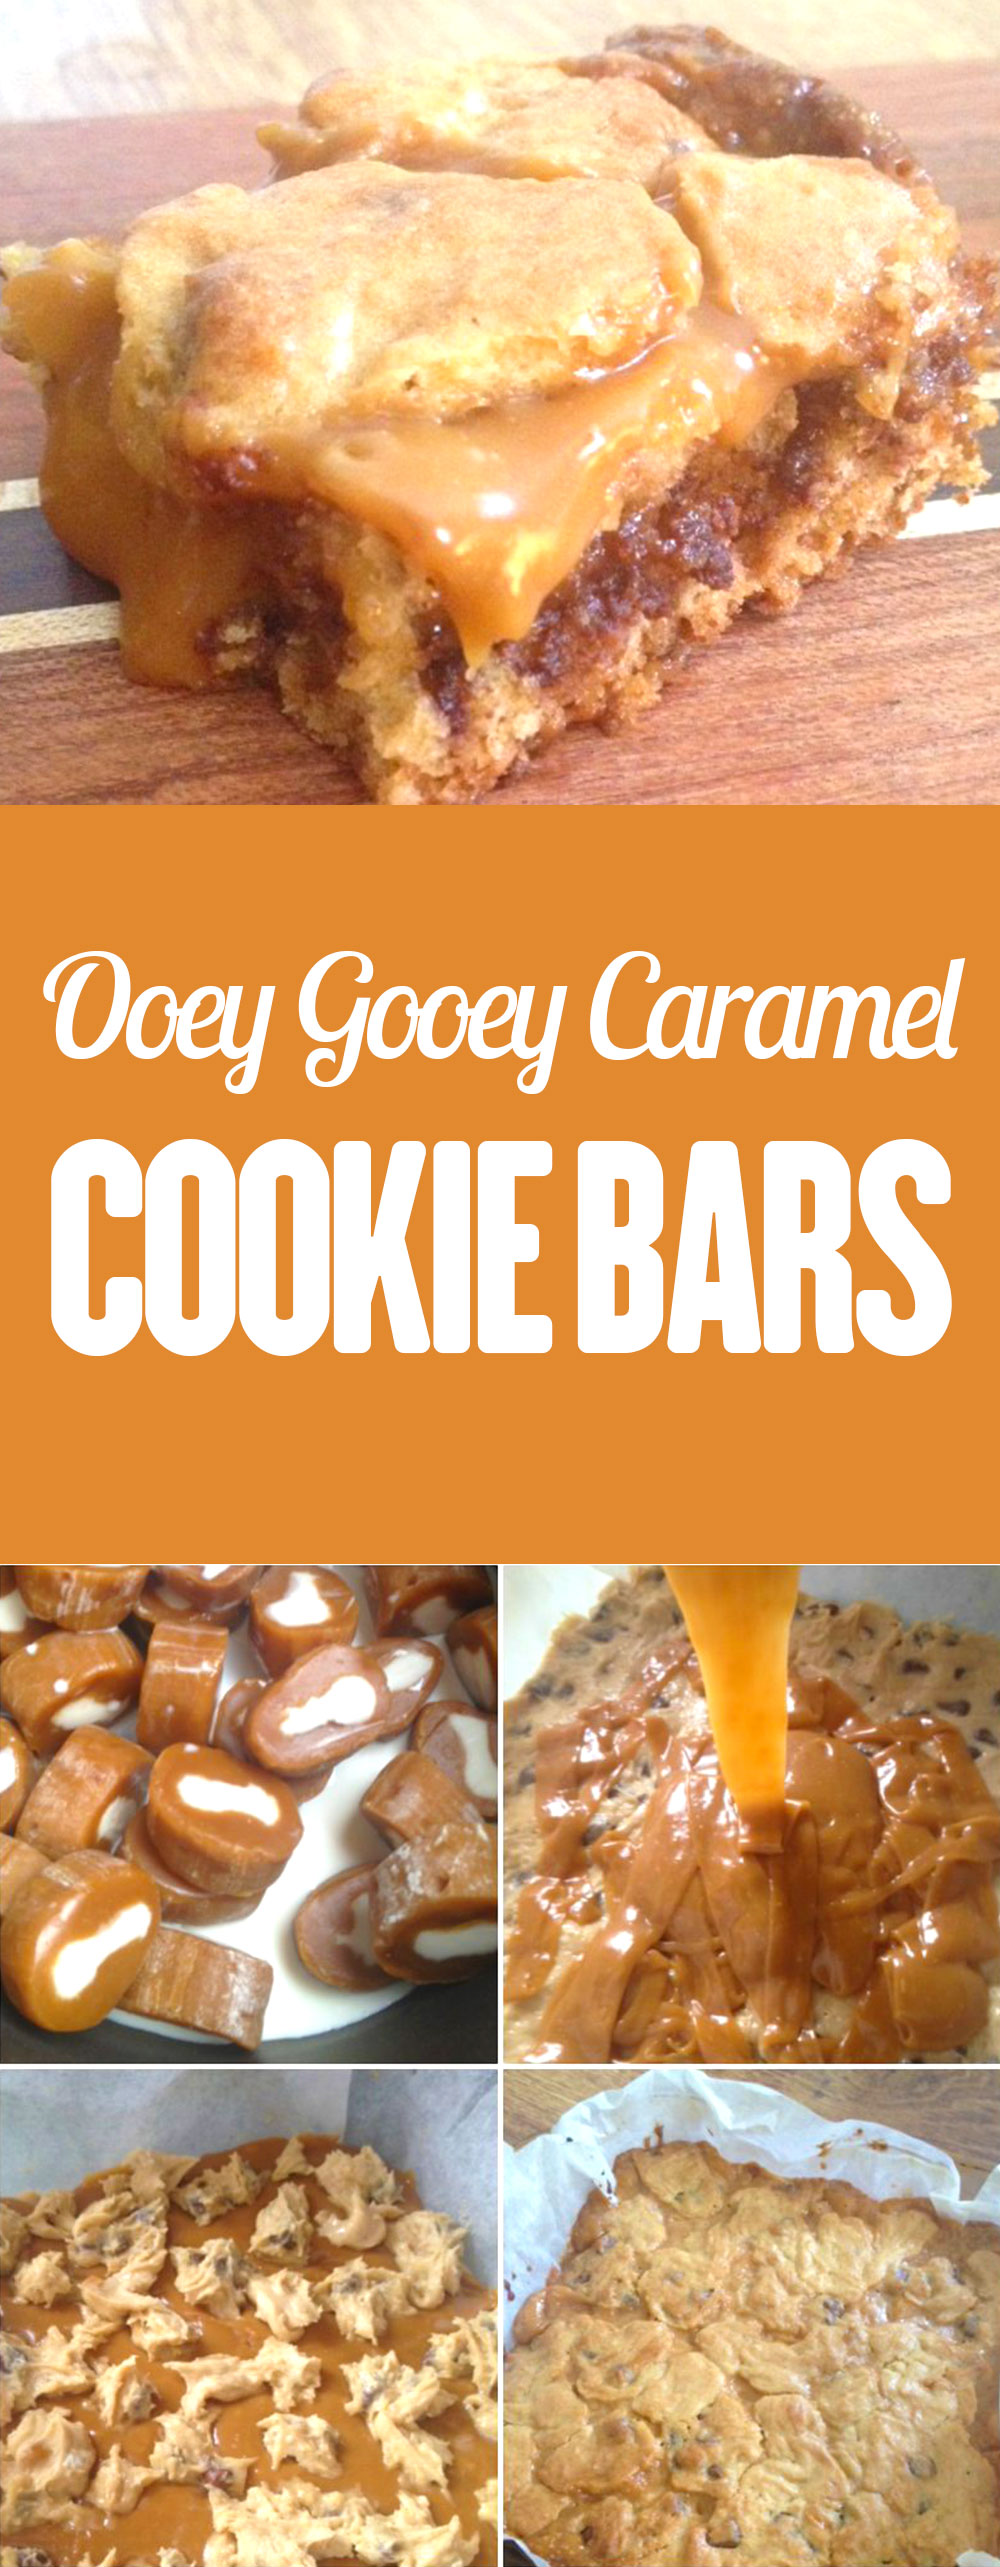 ooey-gooey-caramel-cookie-bars-pinterest